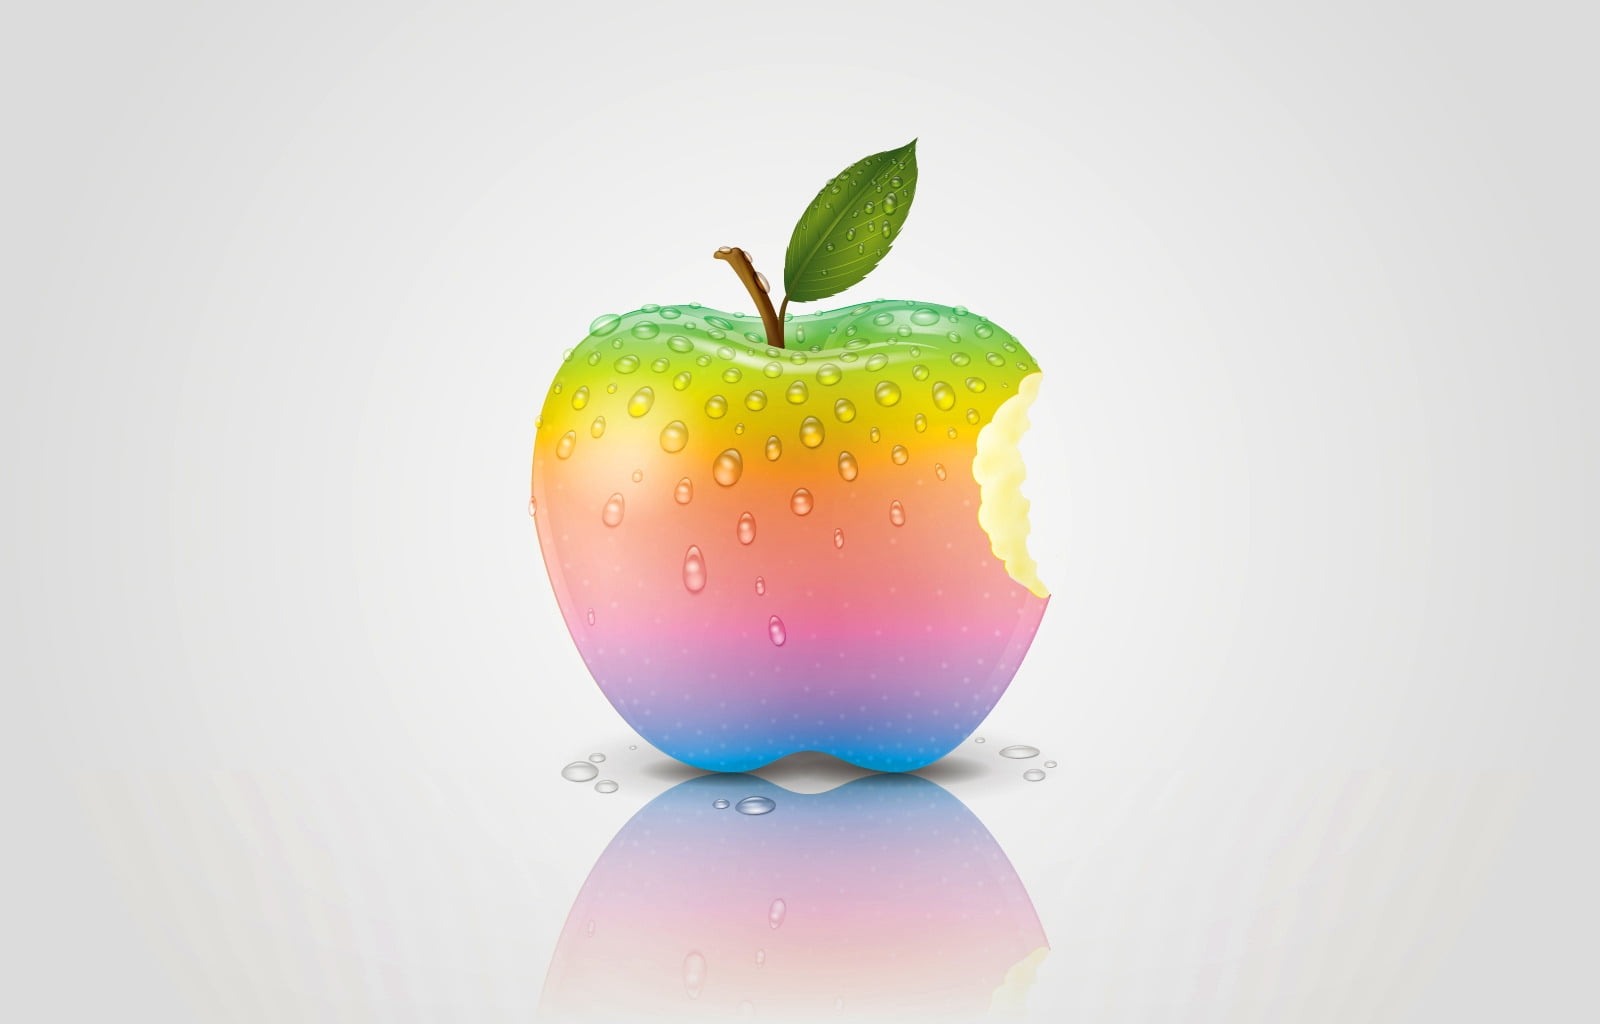 green, yellow, pink, orange, and blue bitten apple